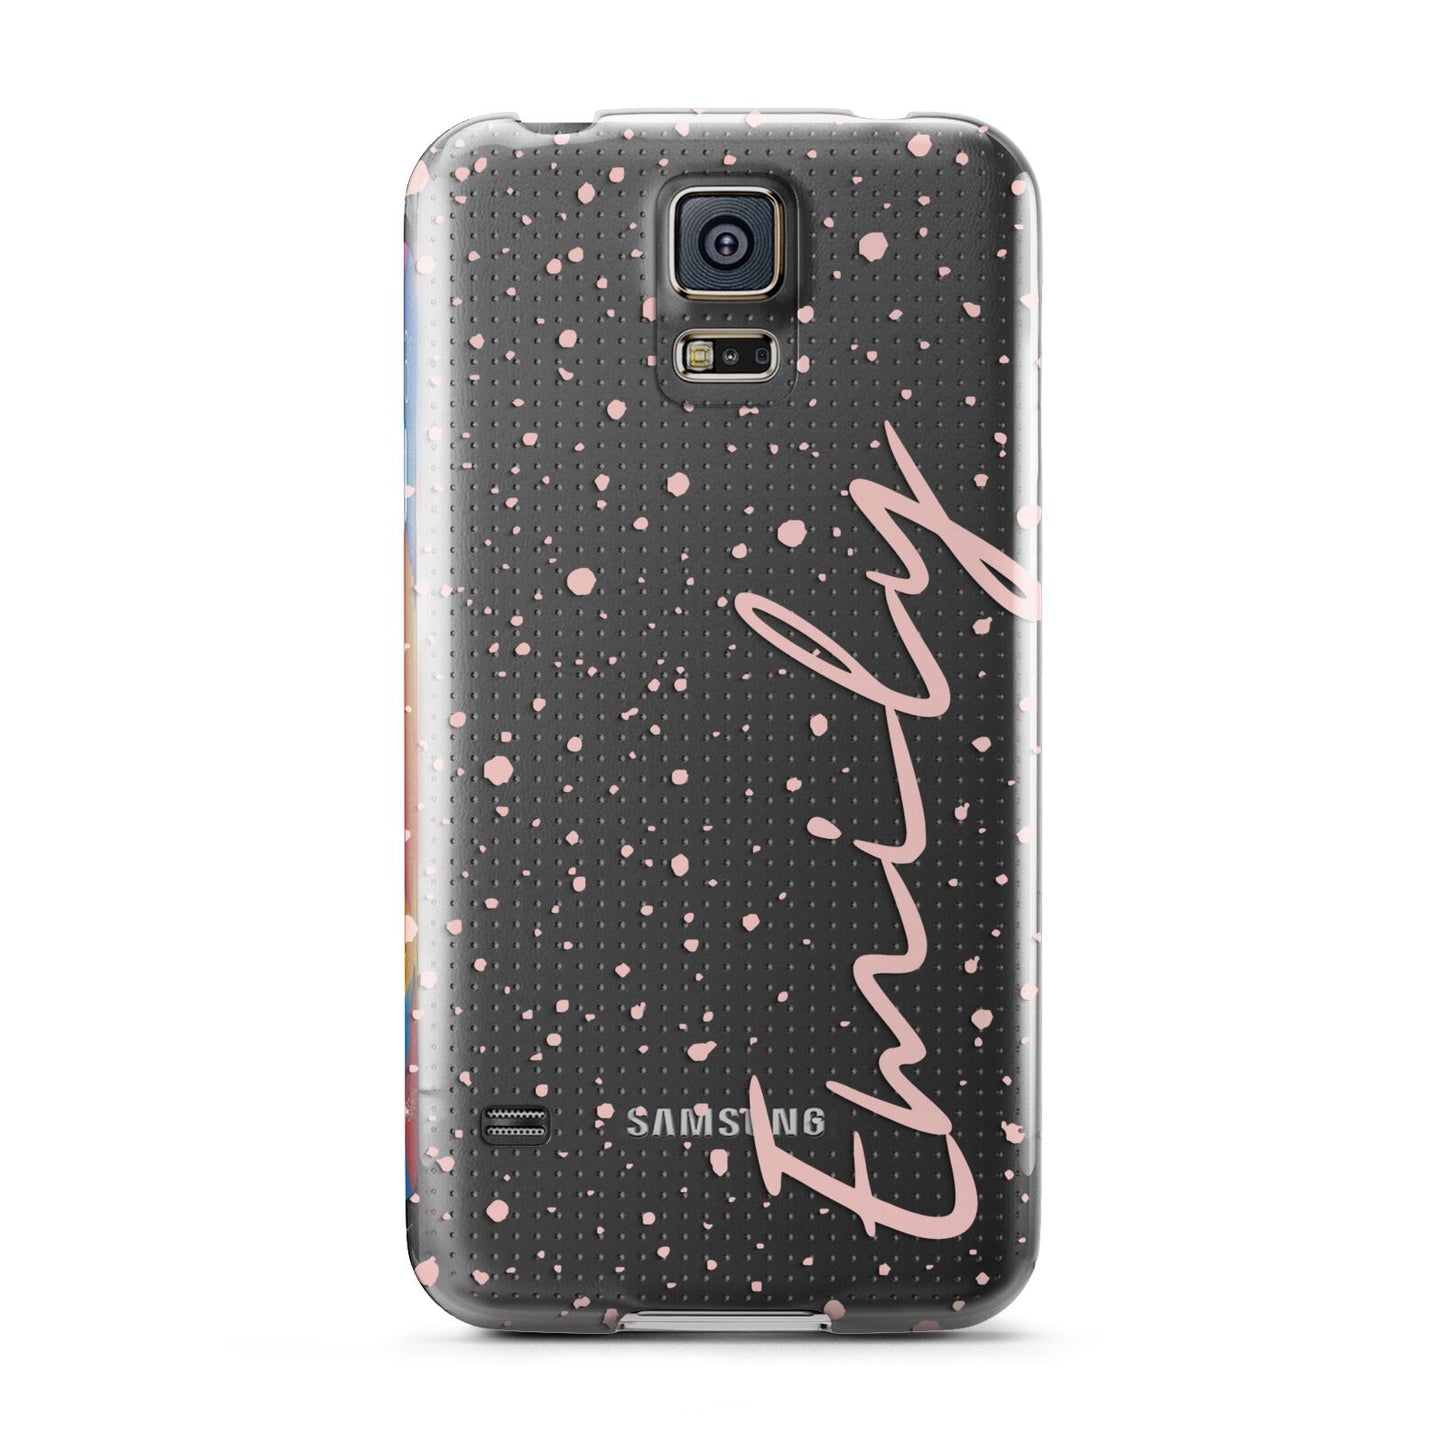 Custom Polka Dot Samsung Galaxy S5 Case